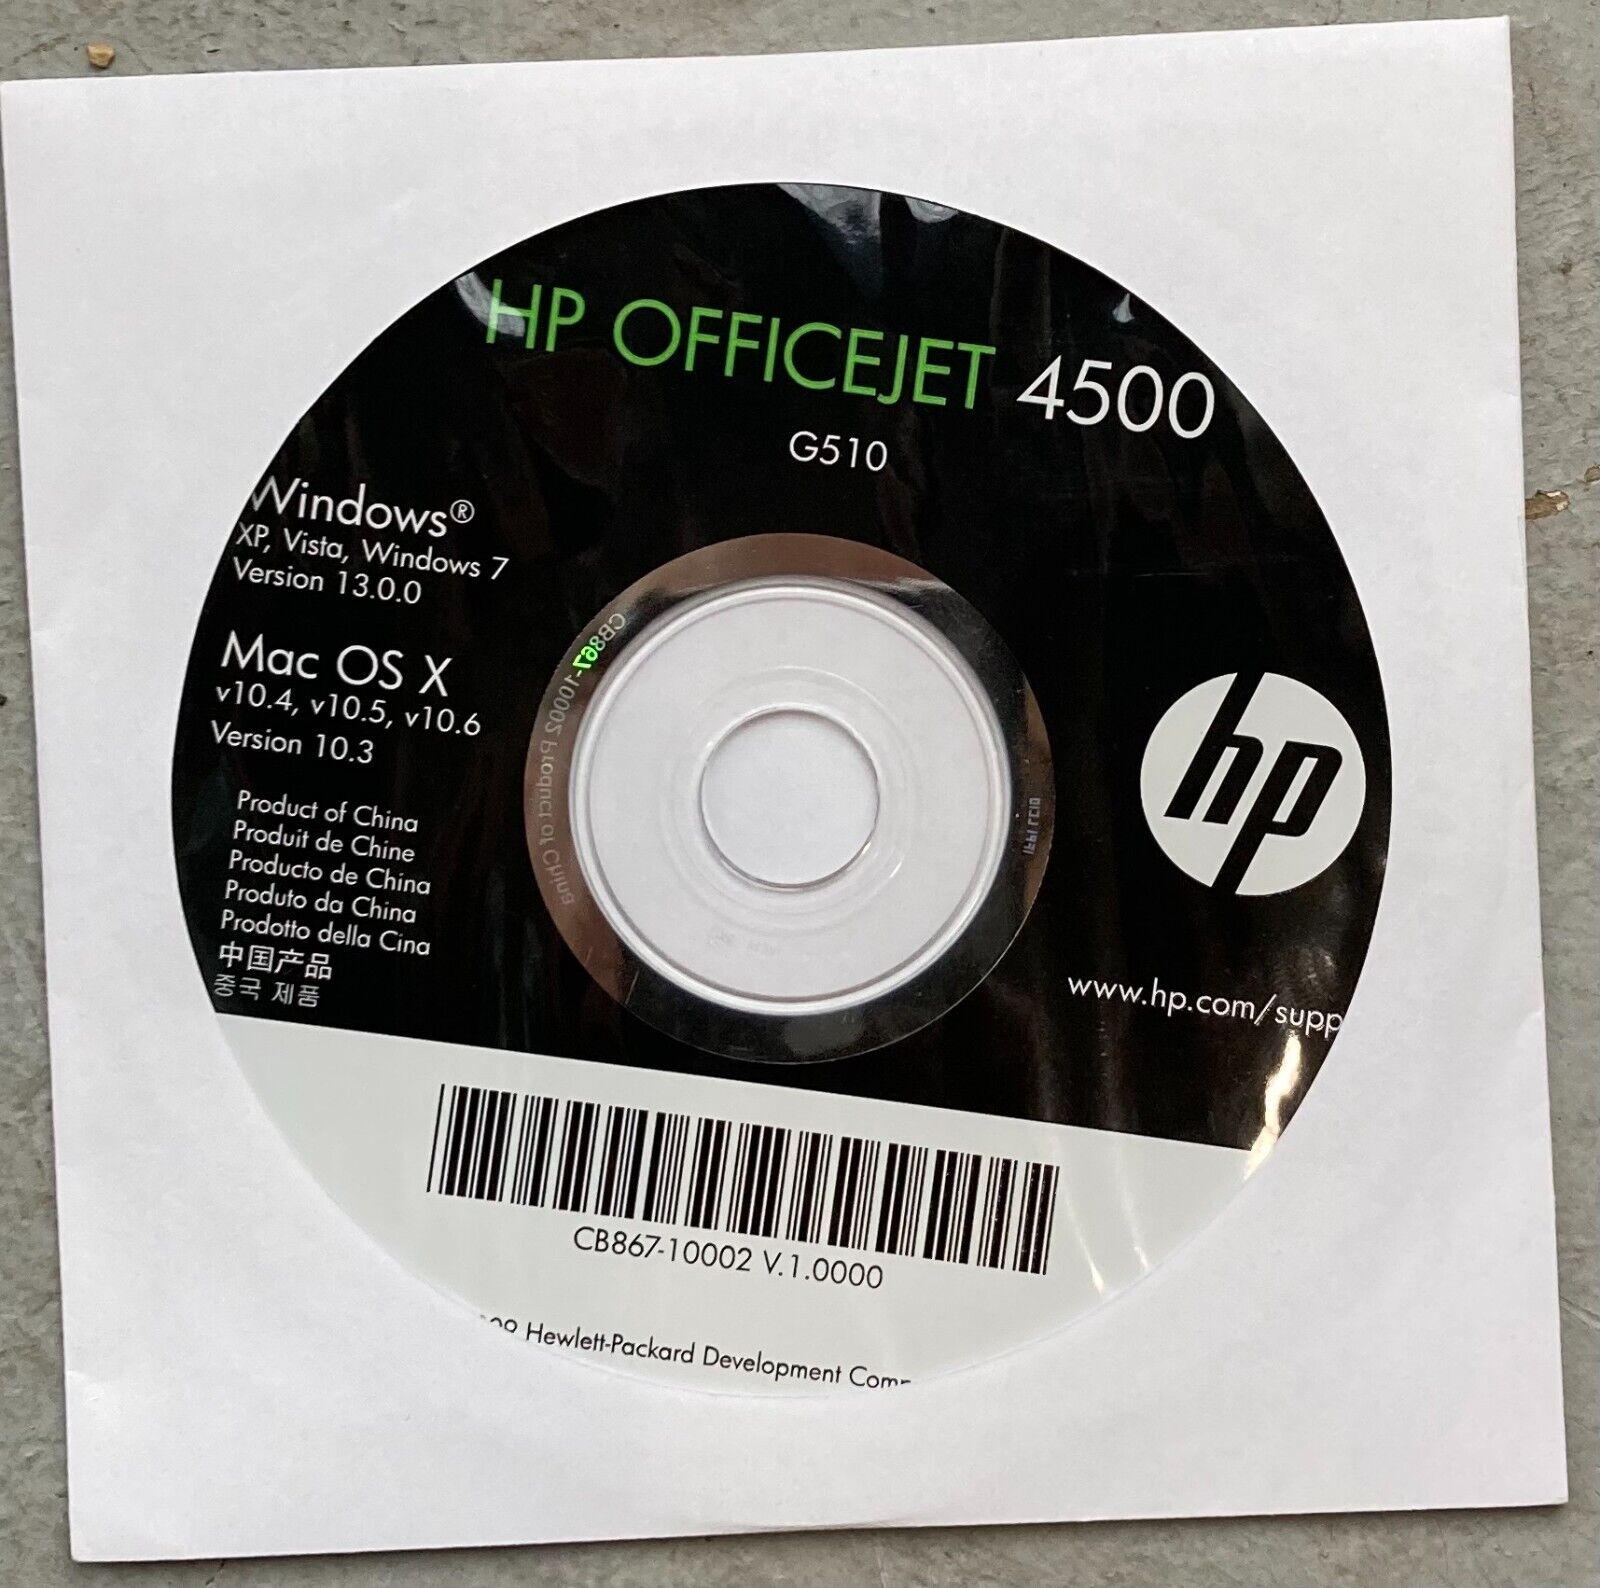 HP OfficeJet 4500 Printer Drivers CD, Windows XP Vista 7 or Mac OS X